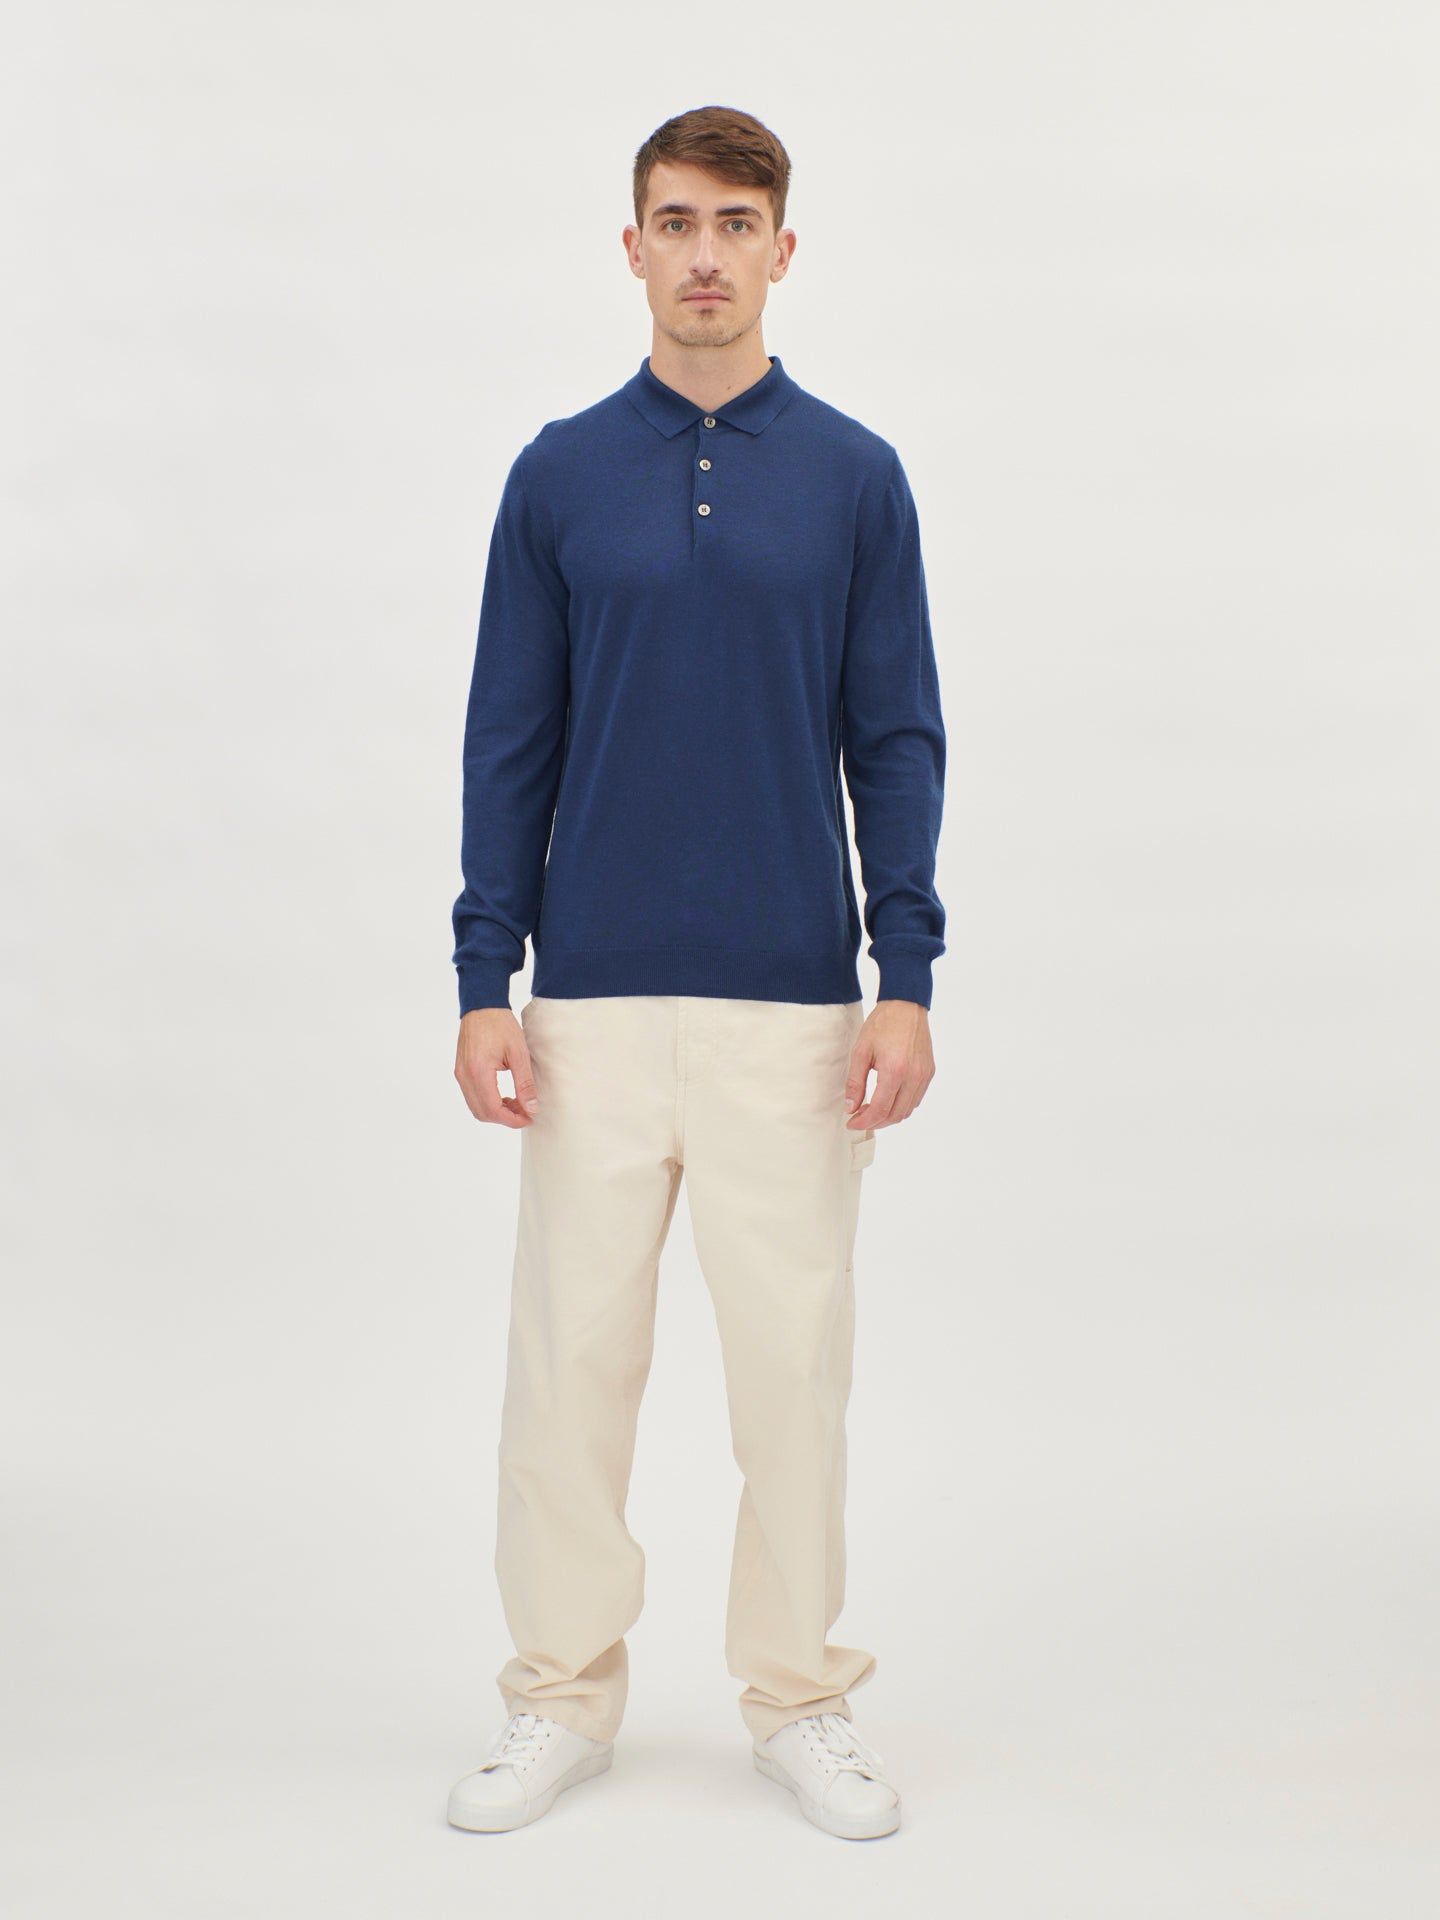 Men's Silk Cashmere Polo Sweater Navy - Gobi Cashmere